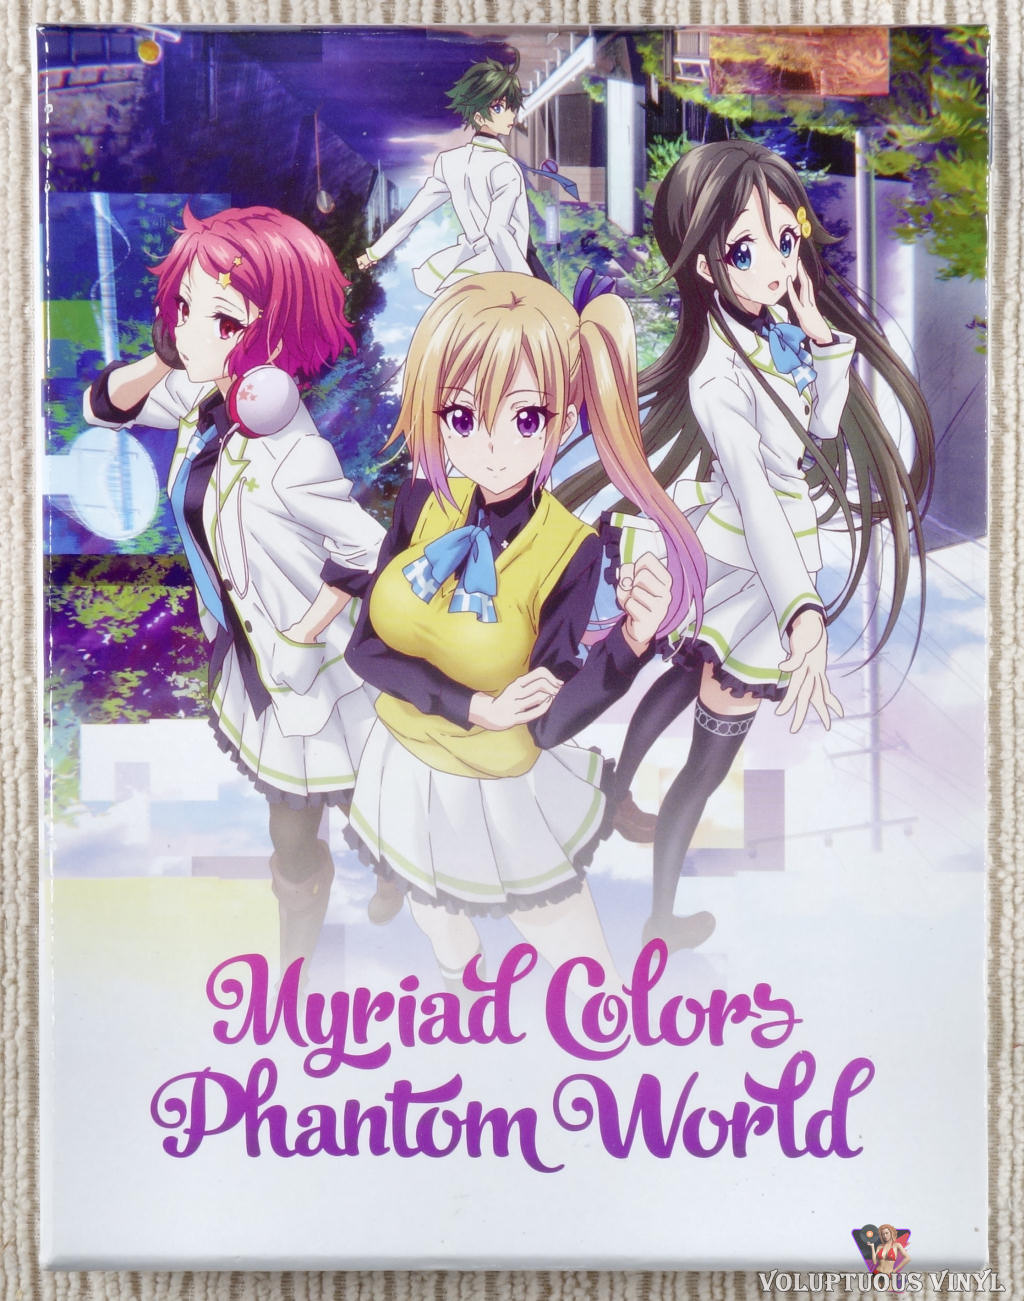 Myriad Colors Phantom World, Episode 8